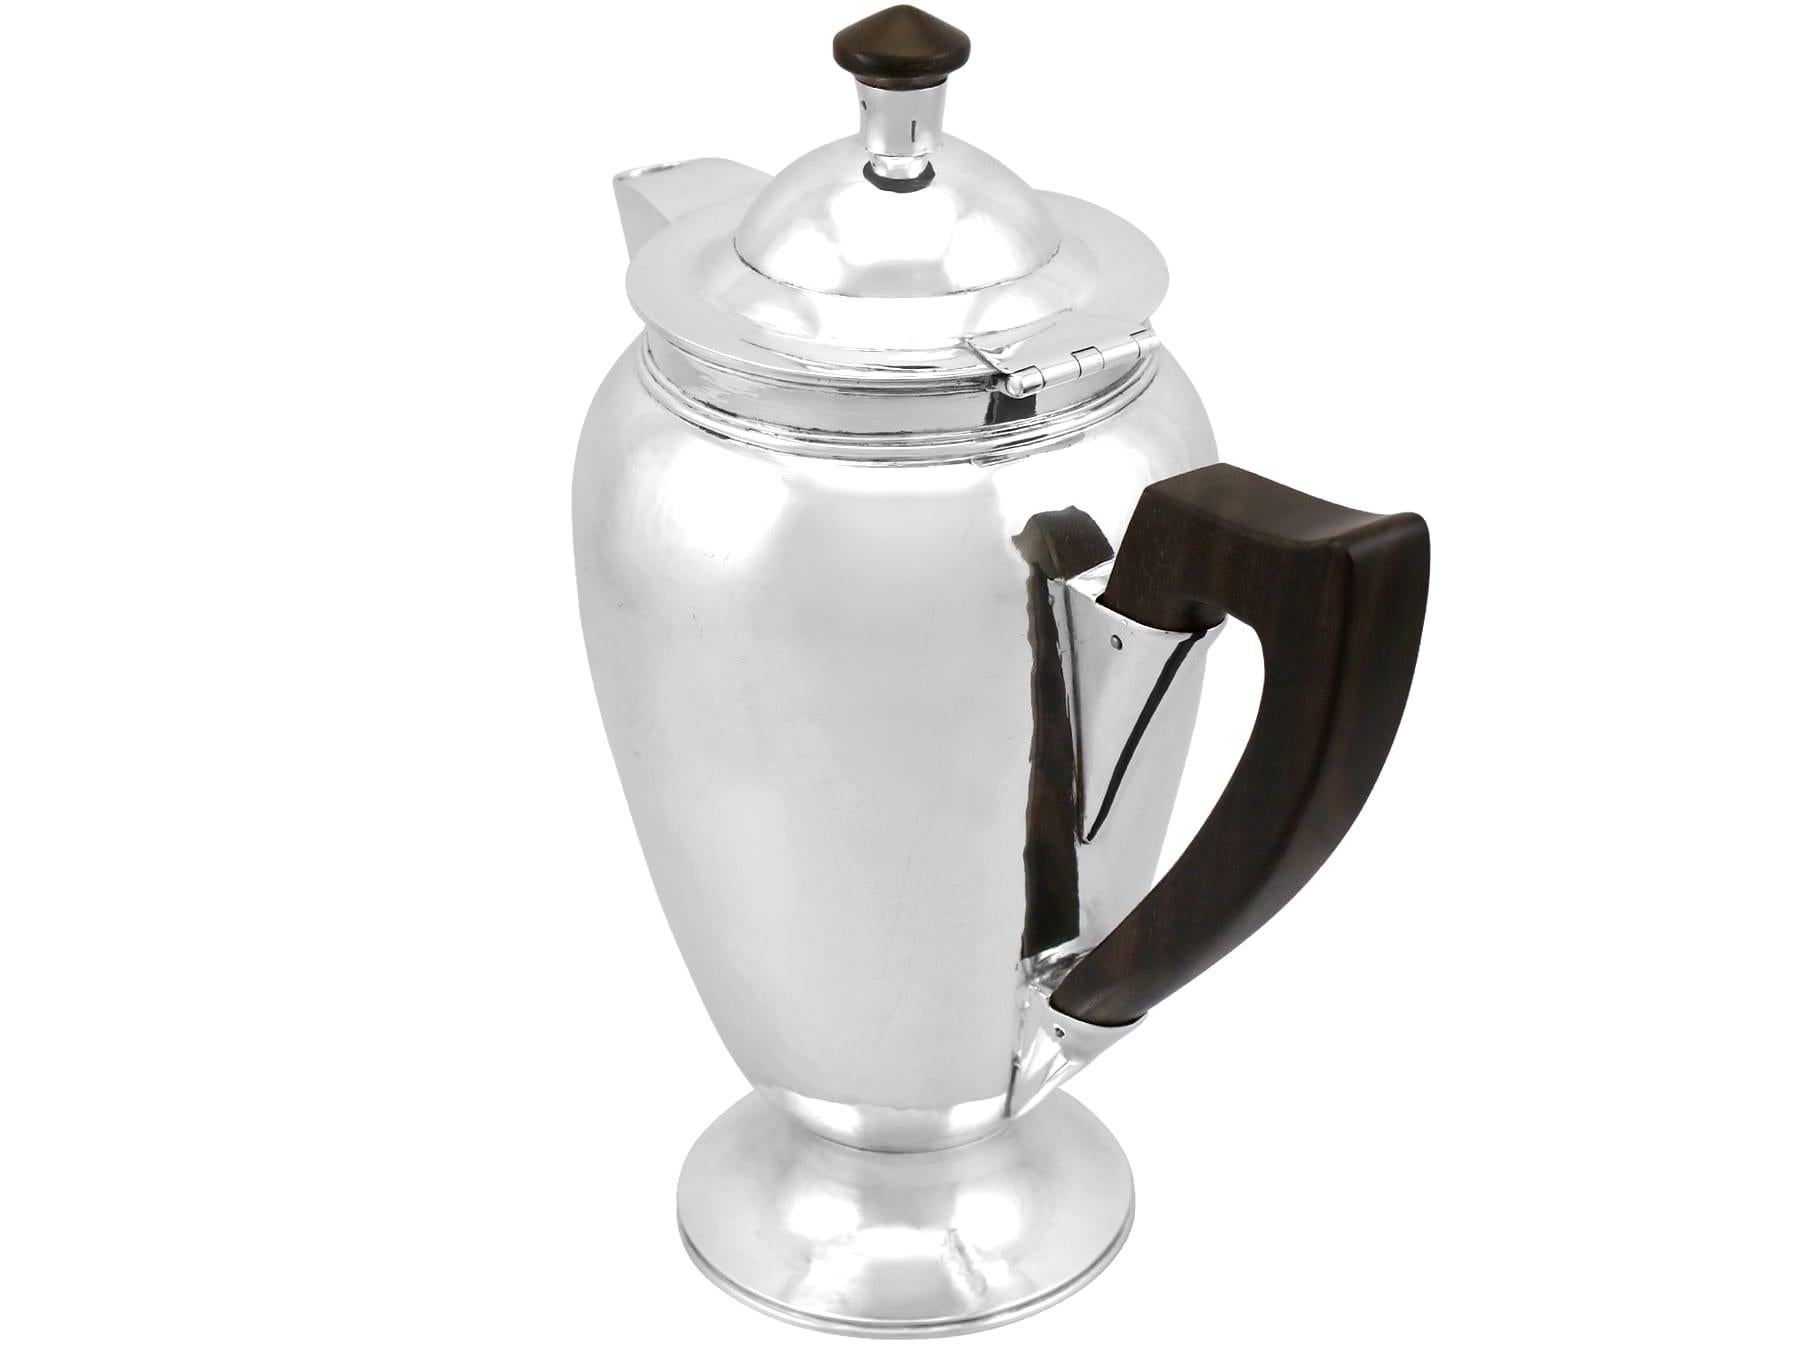 1940s coffee pot